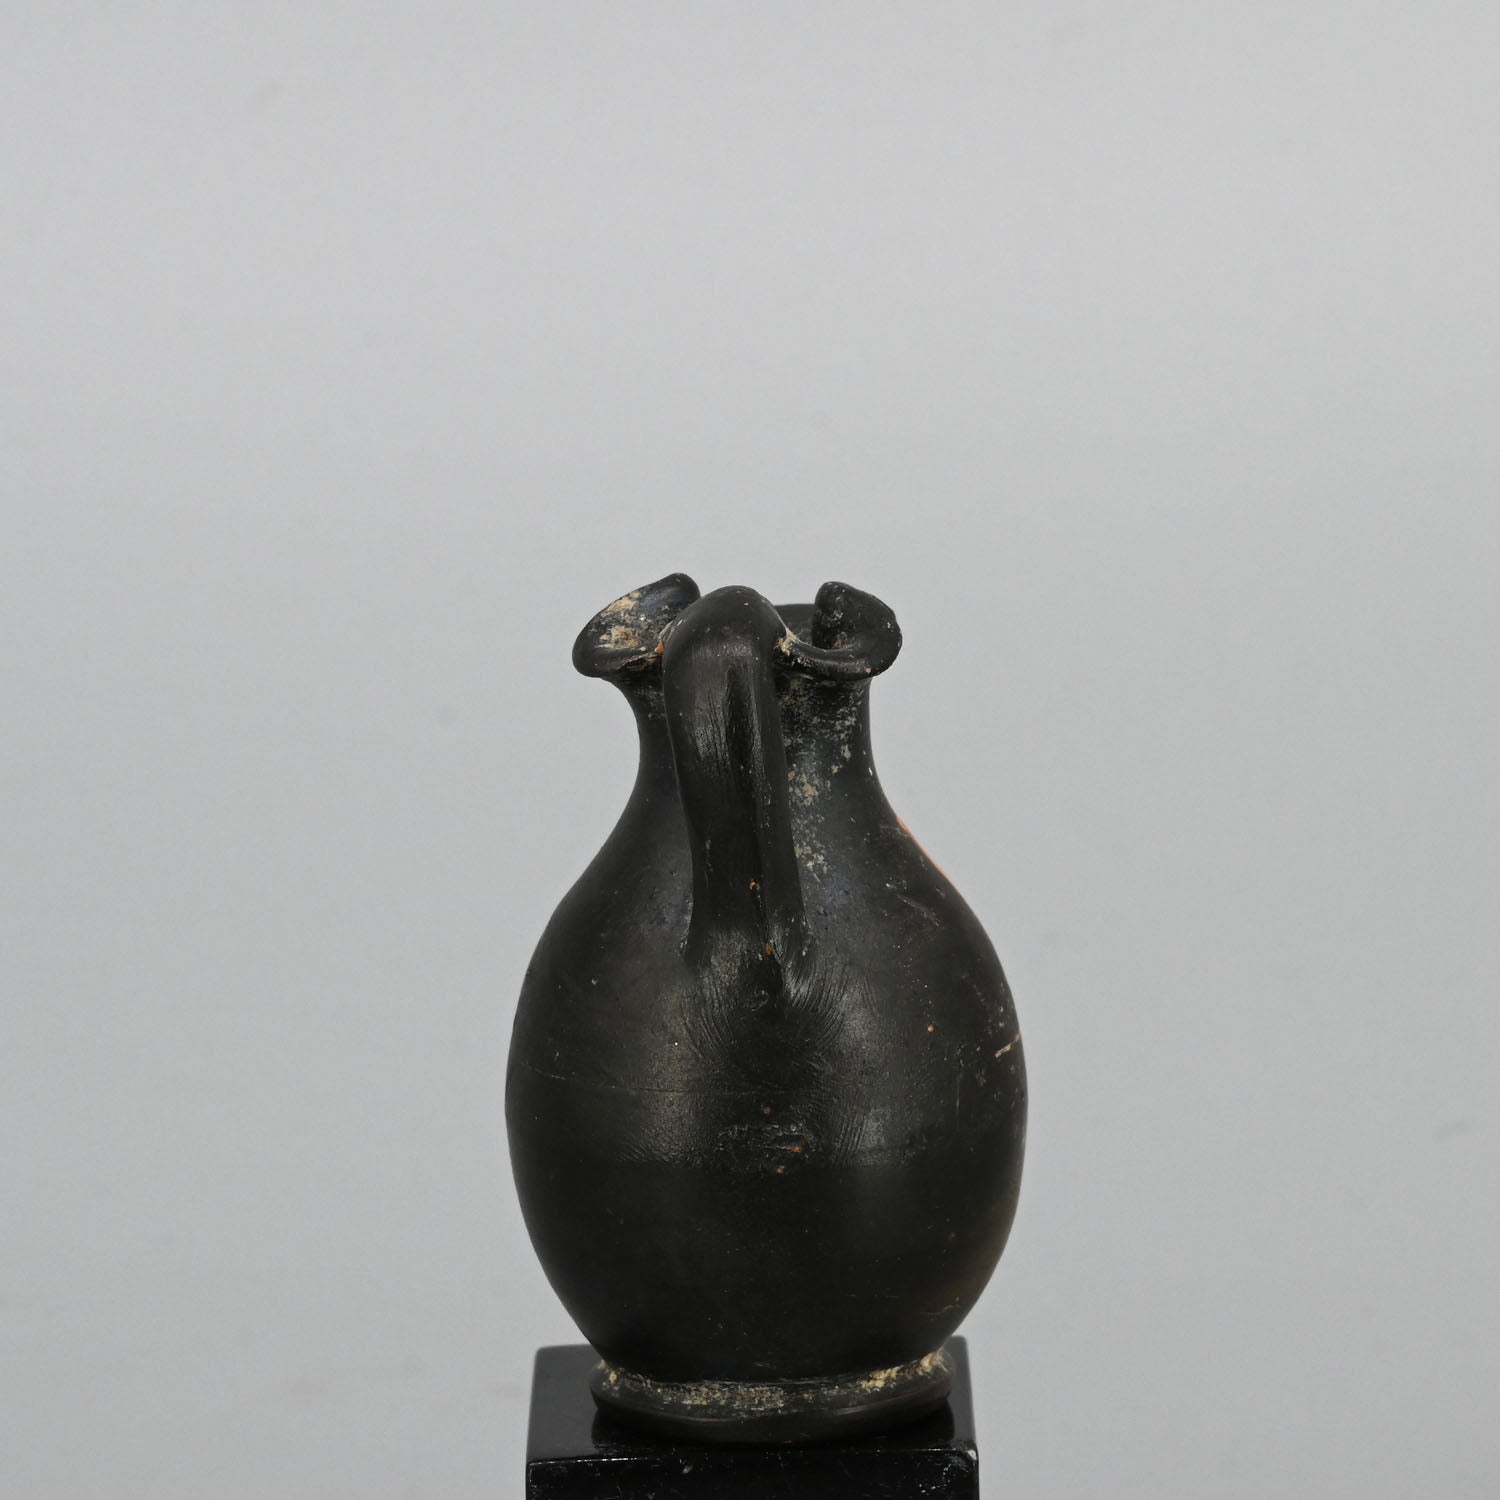 An Apulian Xenonware Miniature Oinochoe, ca. 4th century CE